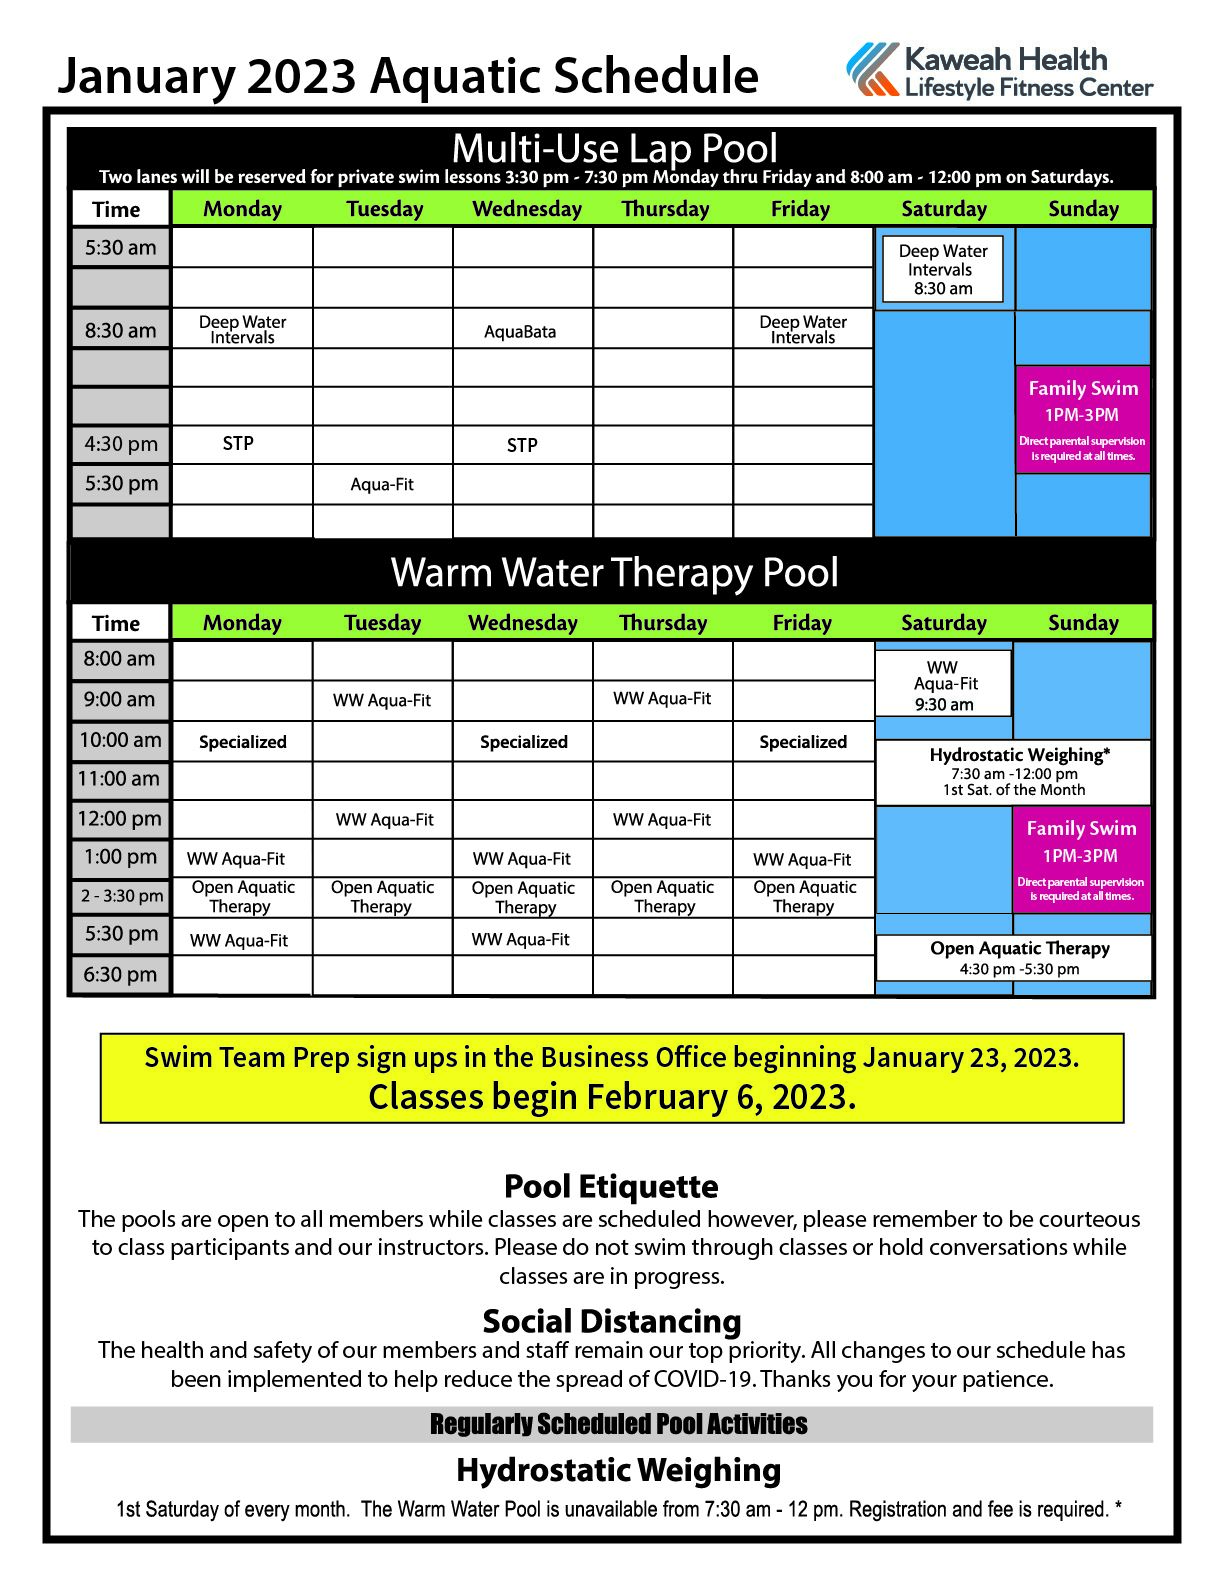 January Aquatic Schedule 2023